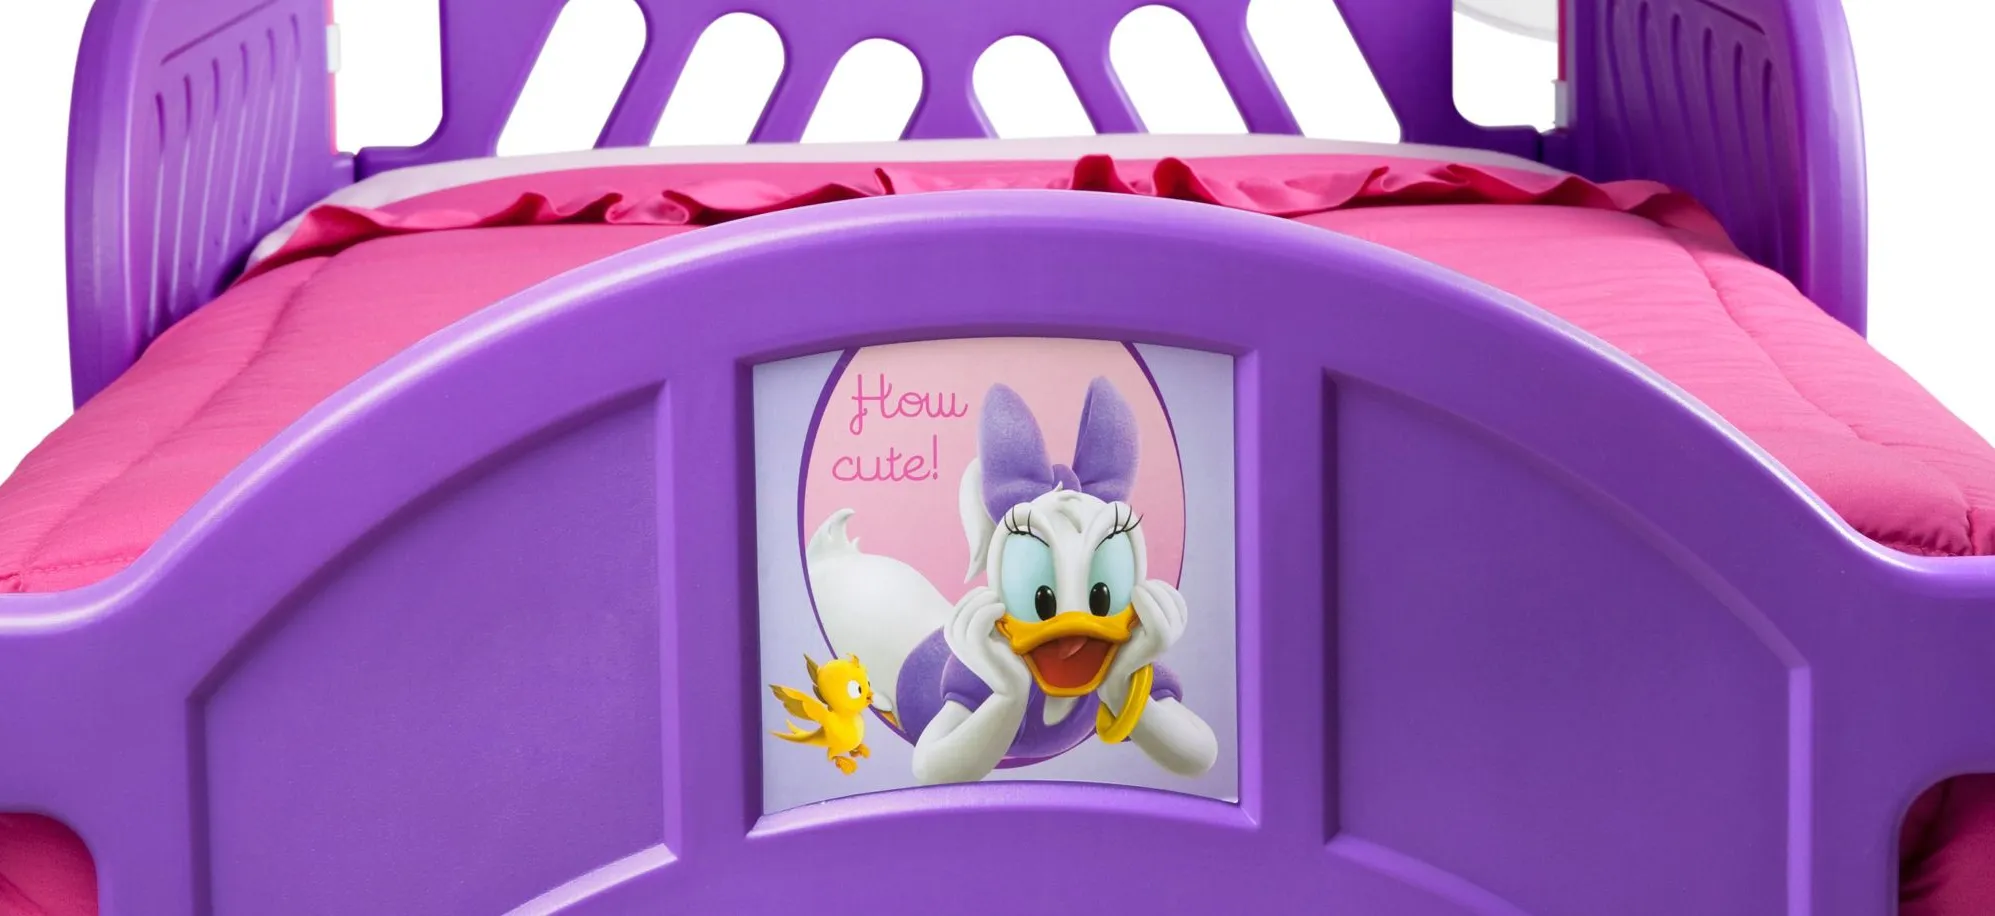 Disney Minnie Mouse Toddler Canopy Bed by Delta Children in Purple by Delta Children